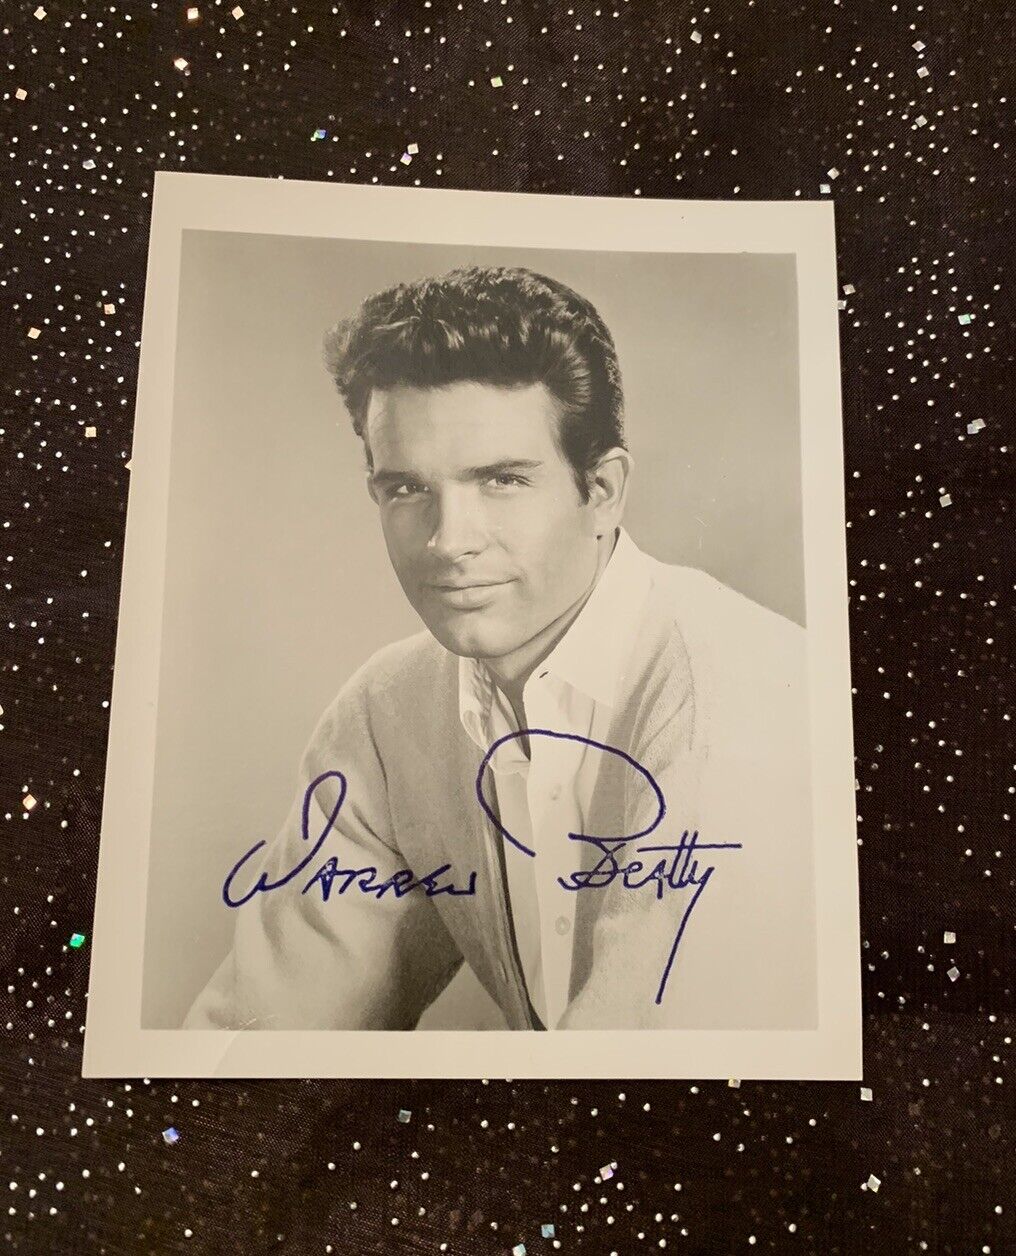 Warren Beatty Signed Photo 5”x 4” Black & White Young